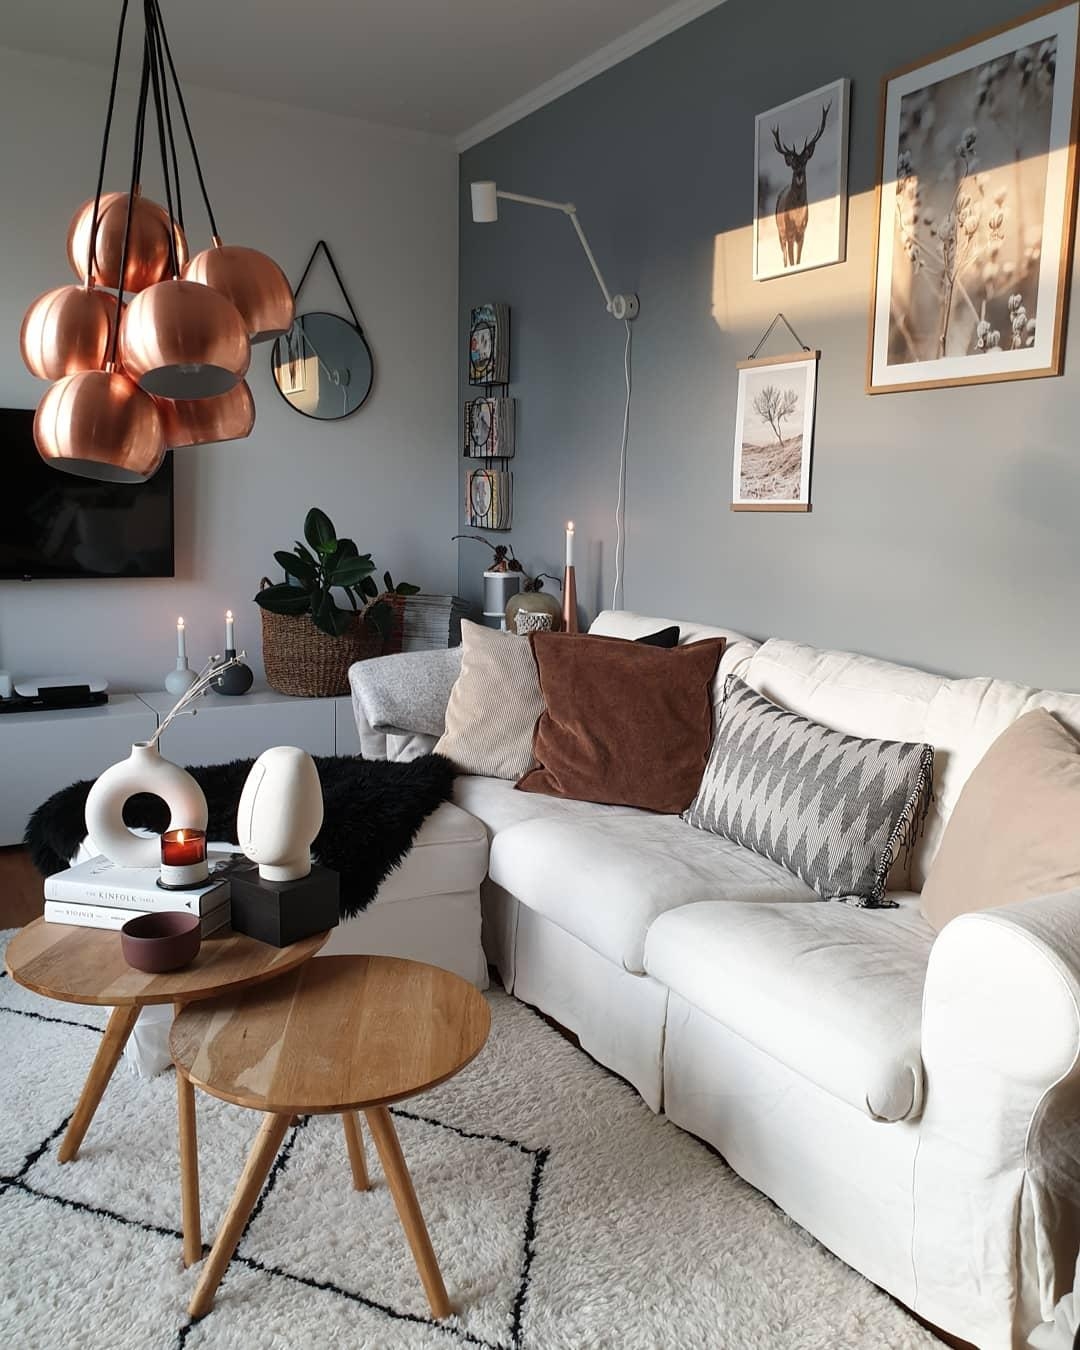 #wohnzimmerinspo #livingroom #interior #decor #skandi #inspo 
Letzte Sonnenstrahlen